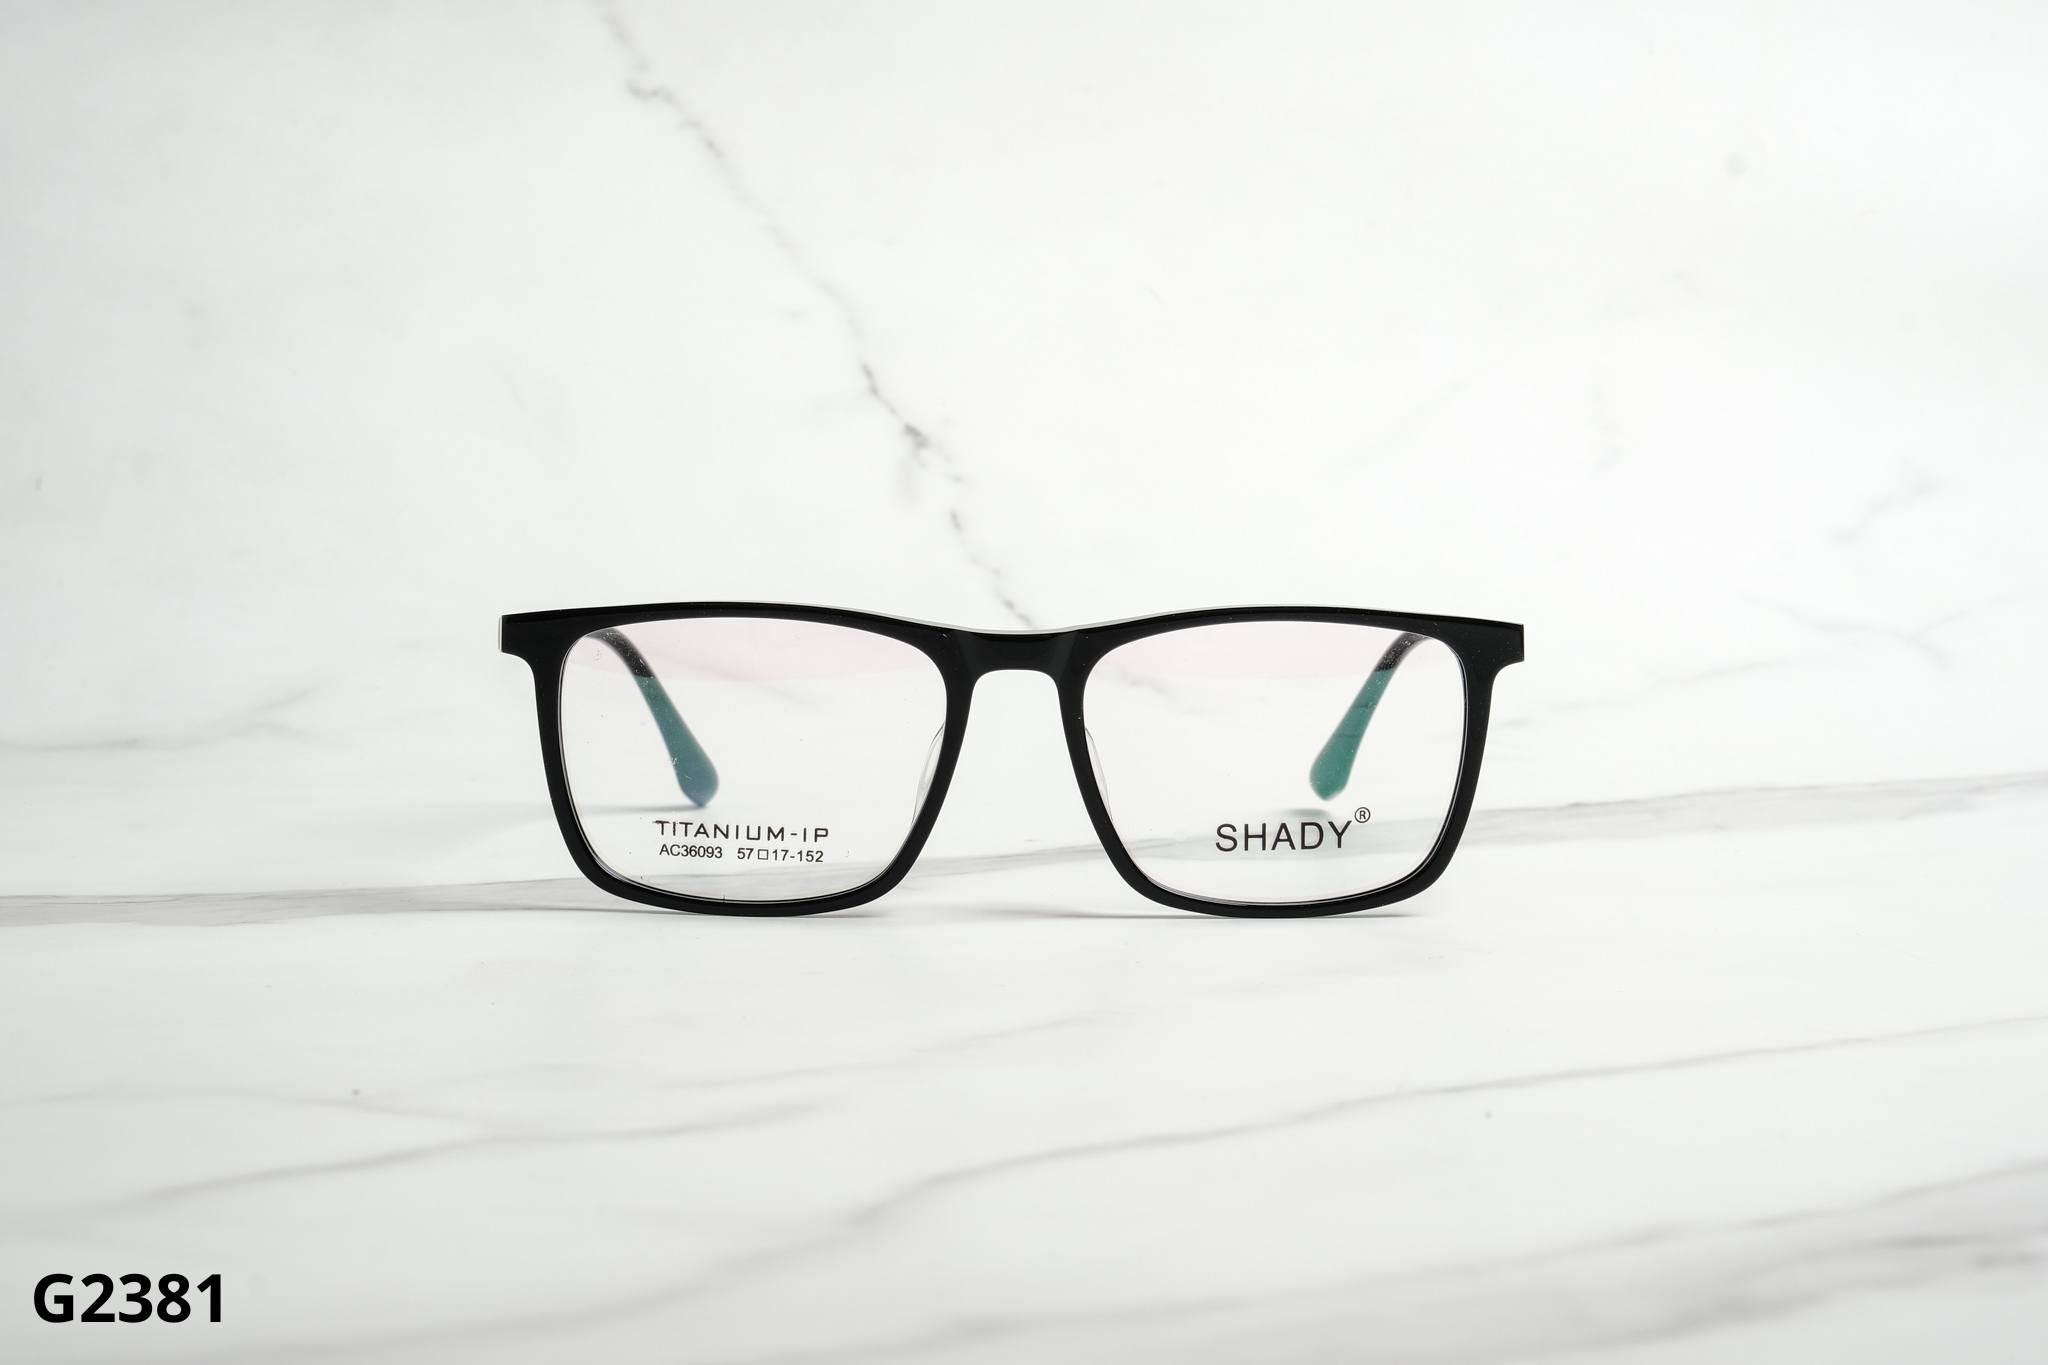  SHADY Eyewear - Glasses - G2381 